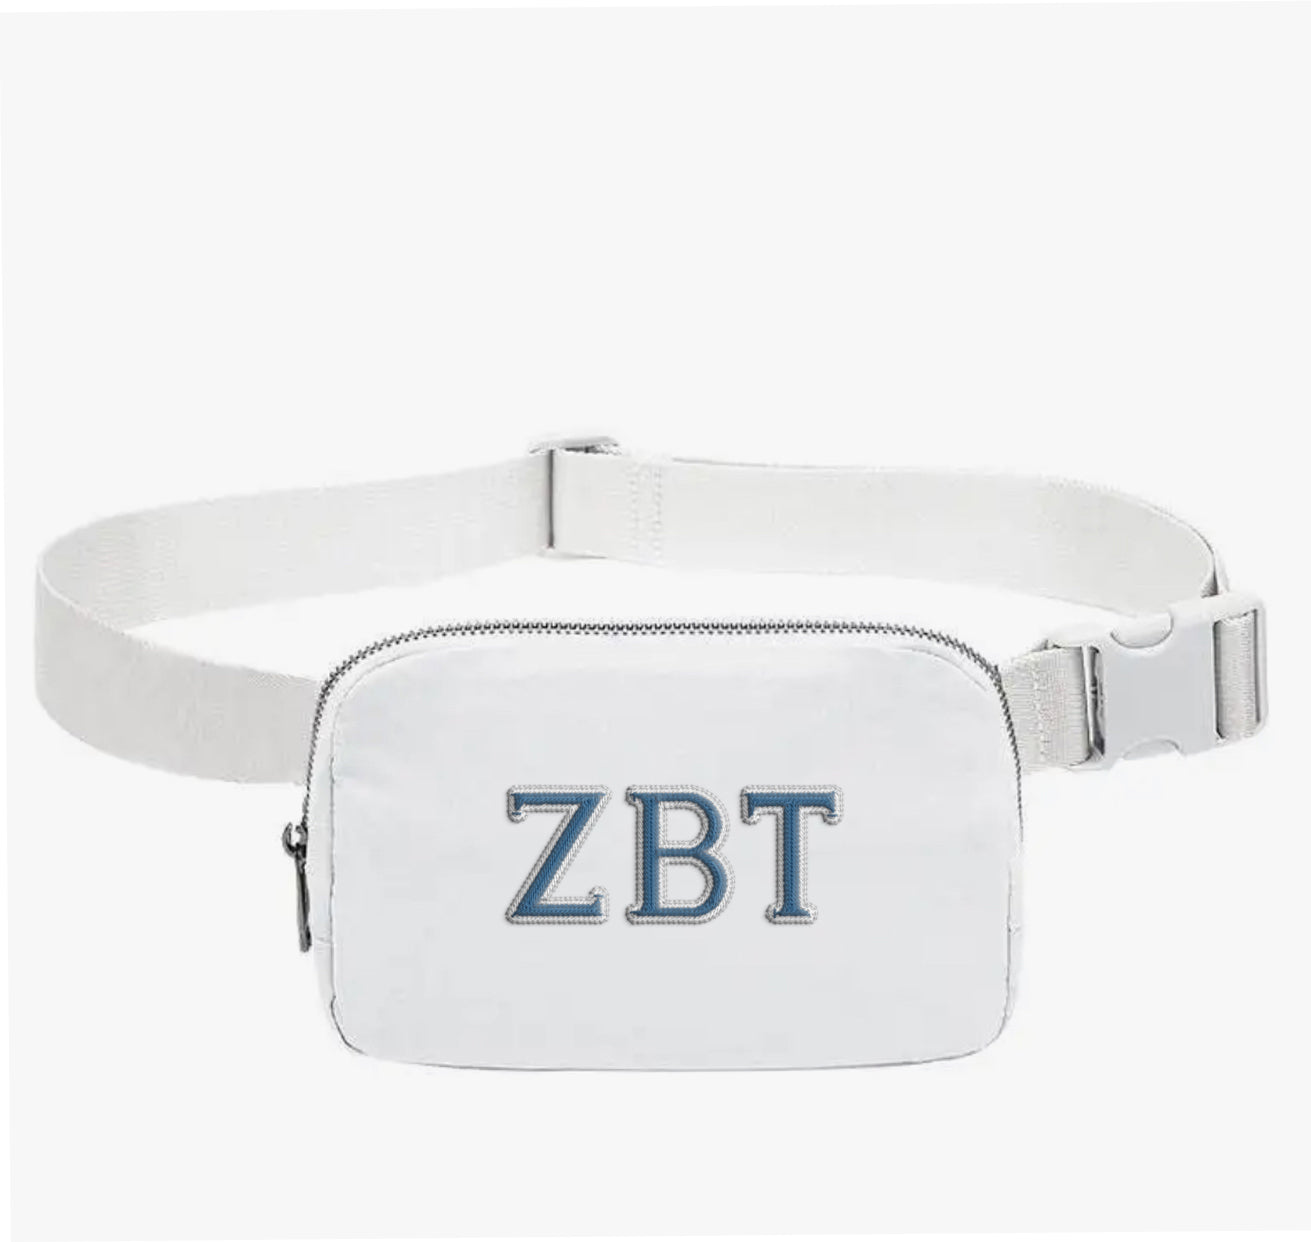 Zeta Beta Tau Embroidered Belt Bag